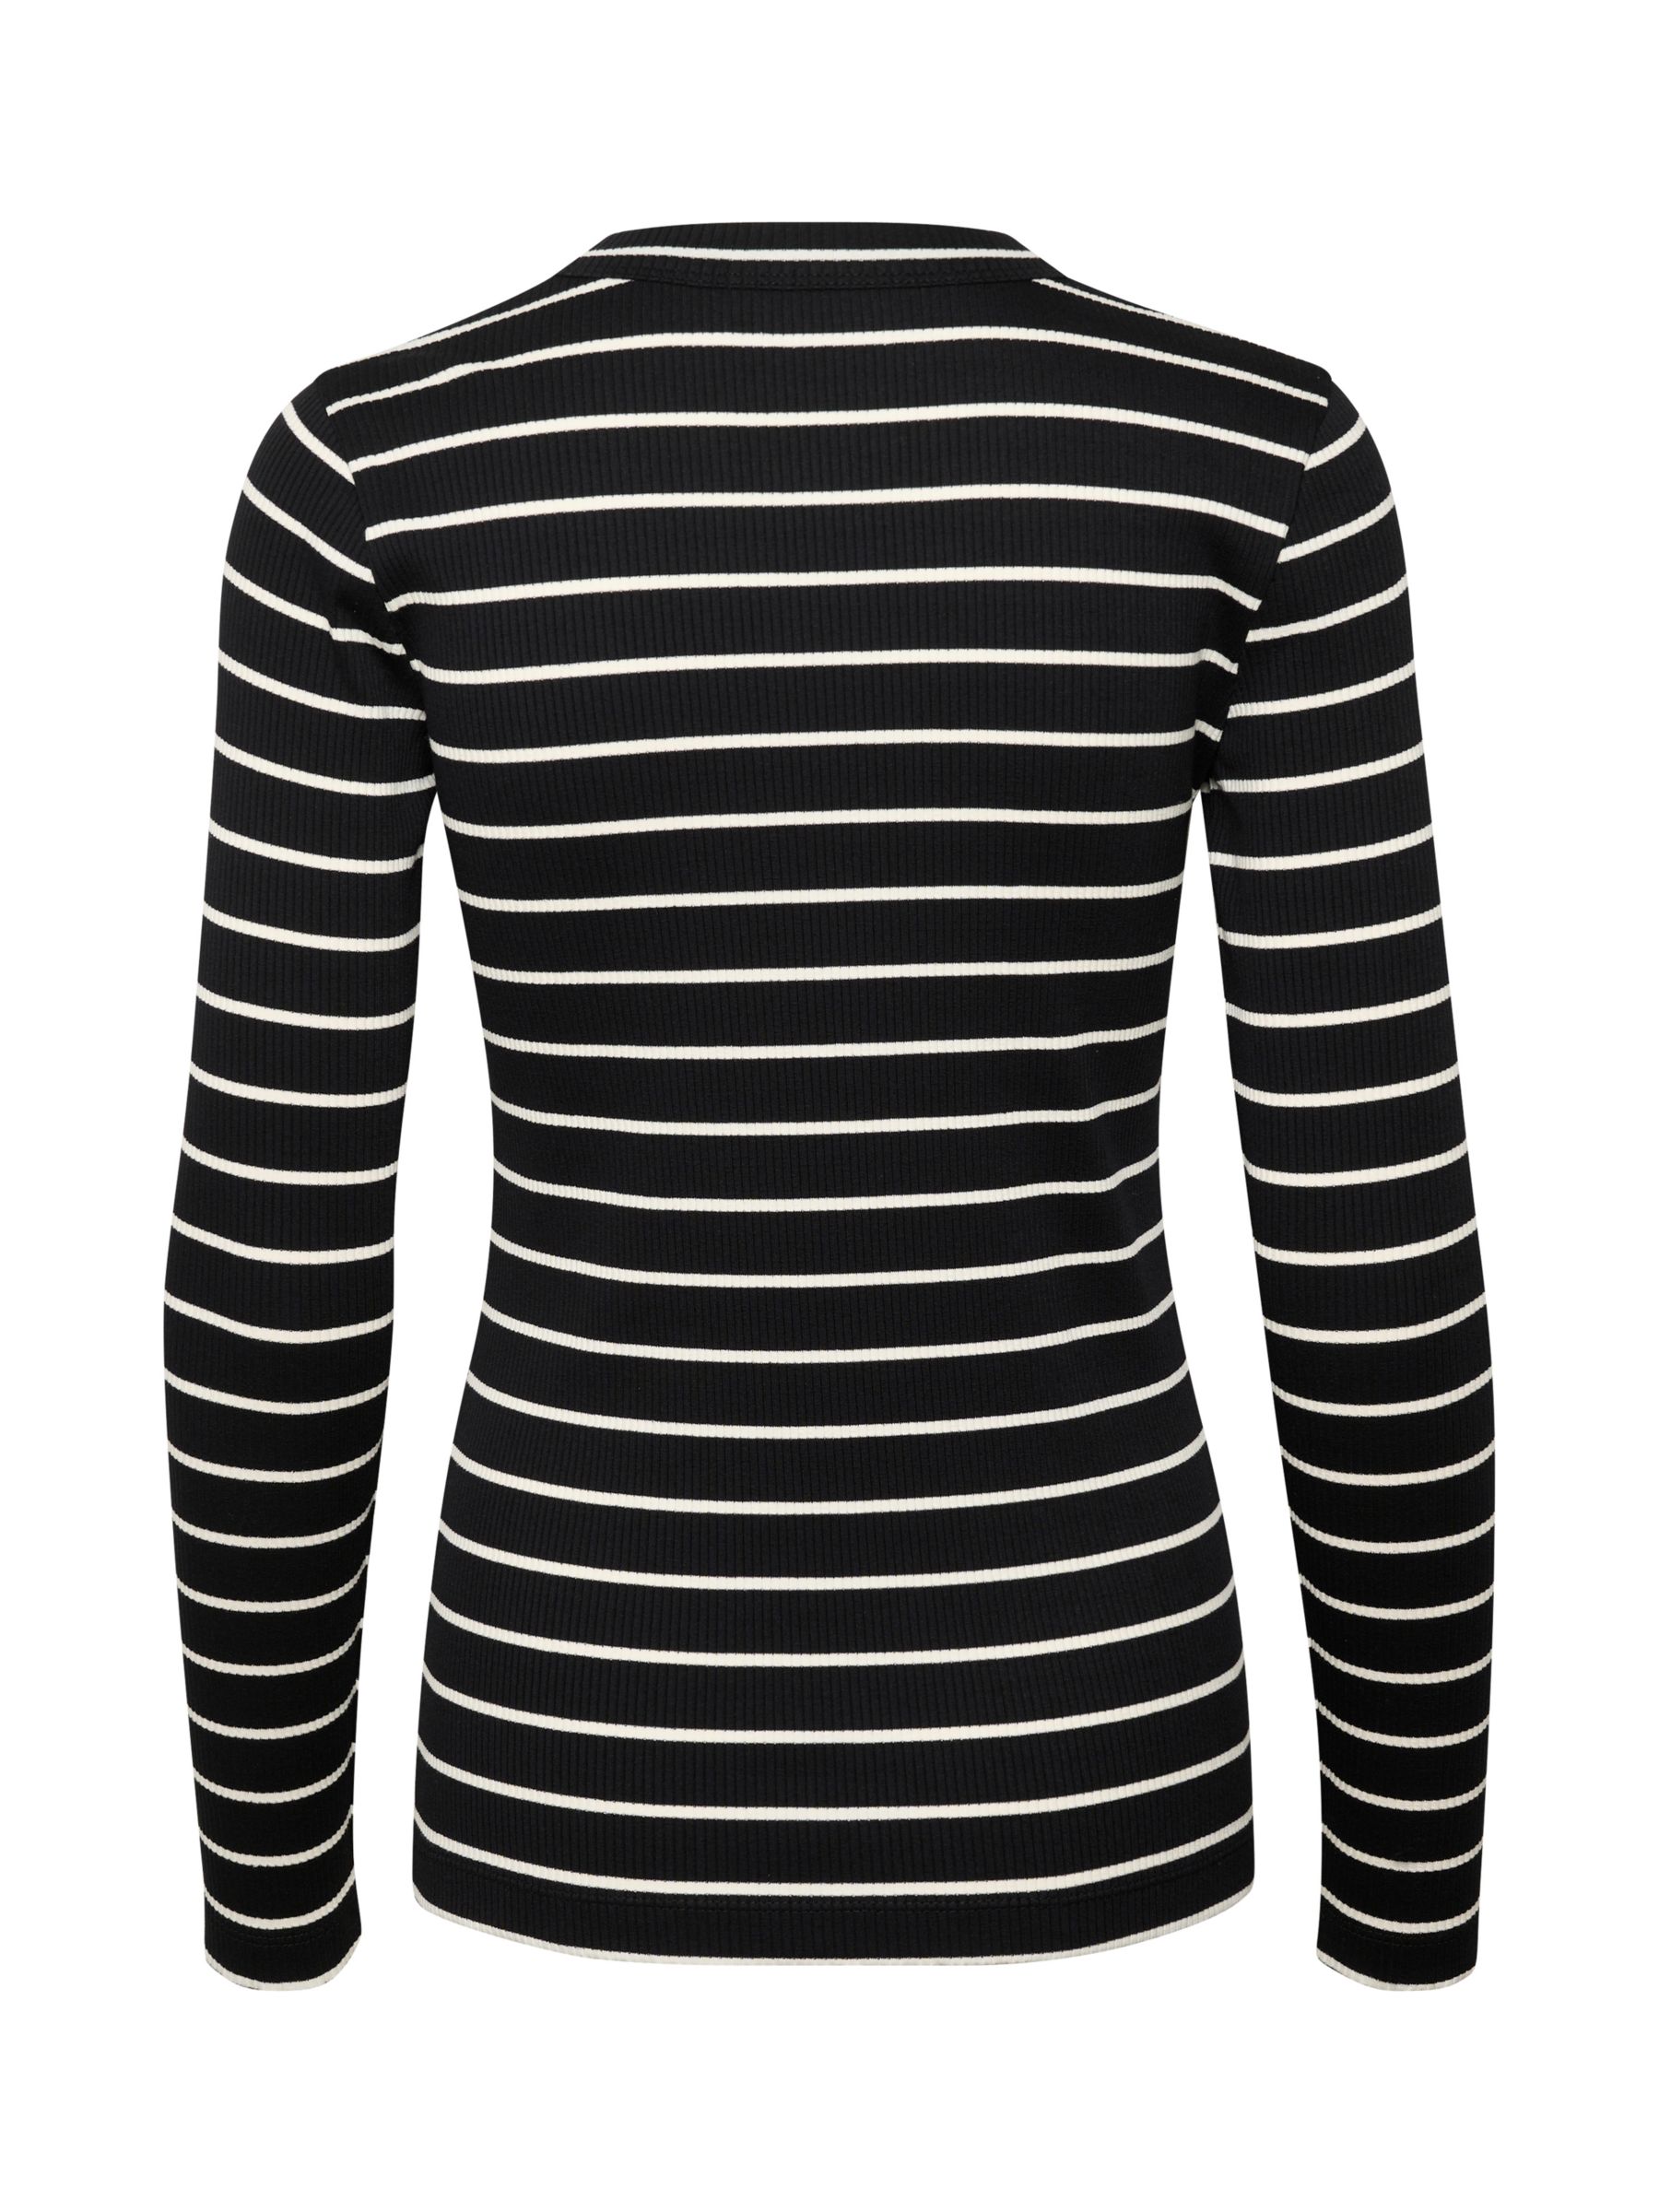 Buy InWear Dagna Stripe Top, Black/Whisper Online at johnlewis.com